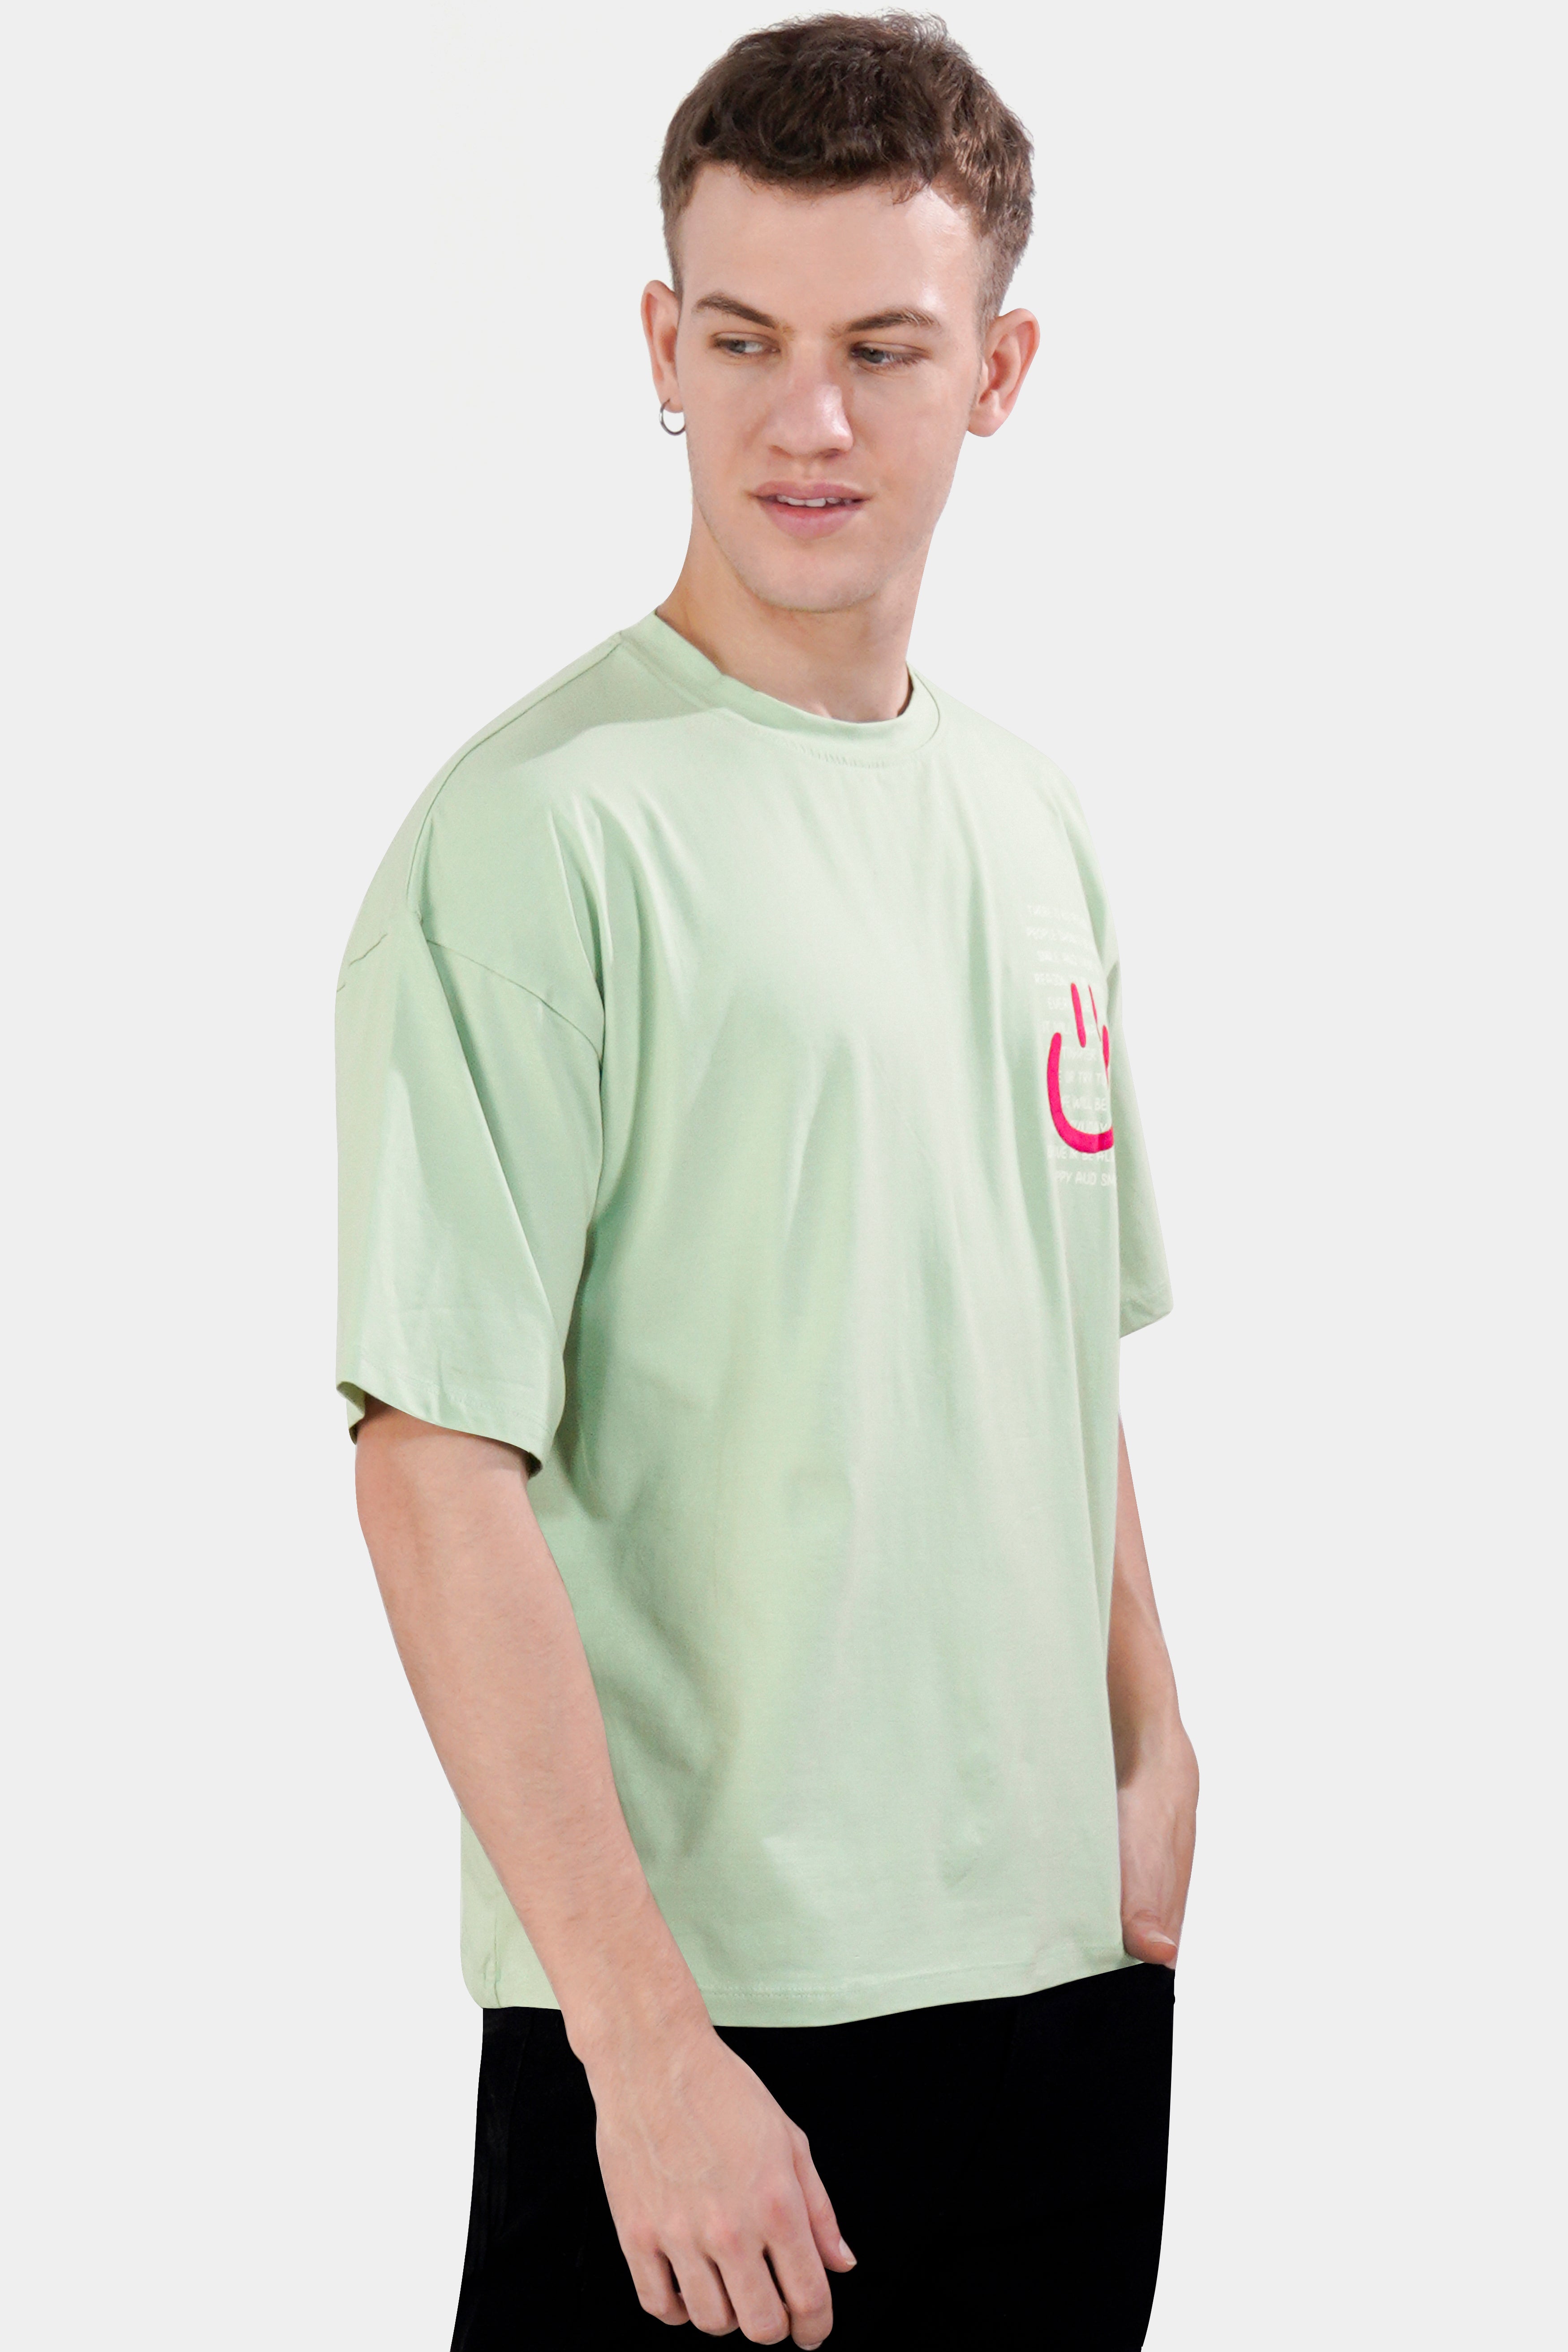 Surf Crest Green Printed Premium Cotton Oversized T-shirt TS954-S, TS954-M, TS954-L, TS954-XL, TS954-XXL